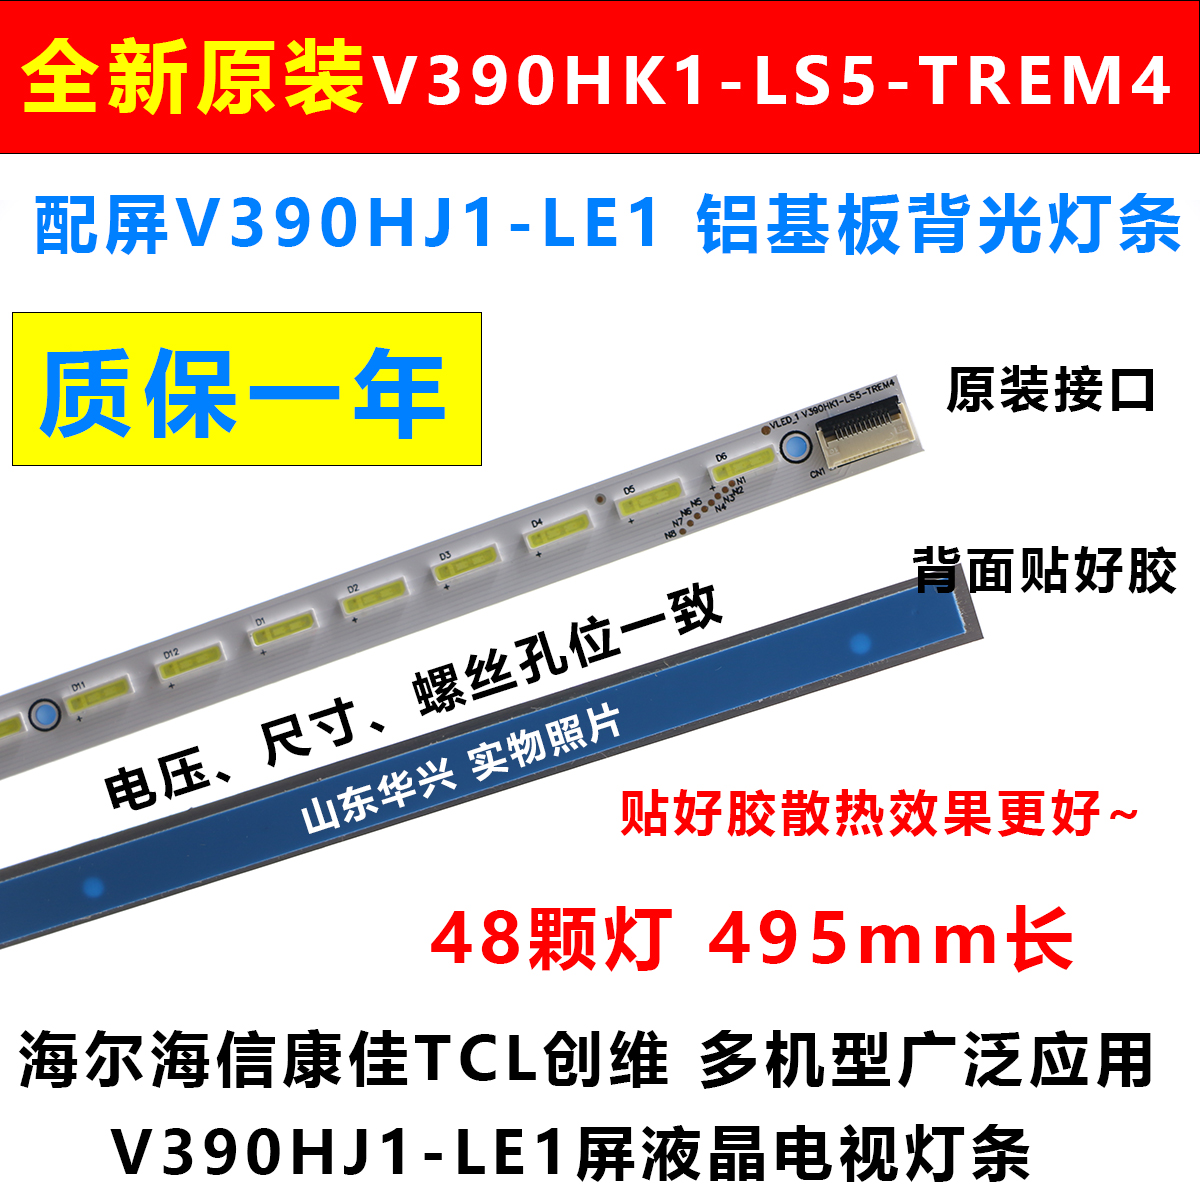 Hisense LED39K300J lamp strip V390HK1-LS5-TREM4 screen V390HJ1-LE1 side into the backlight strip